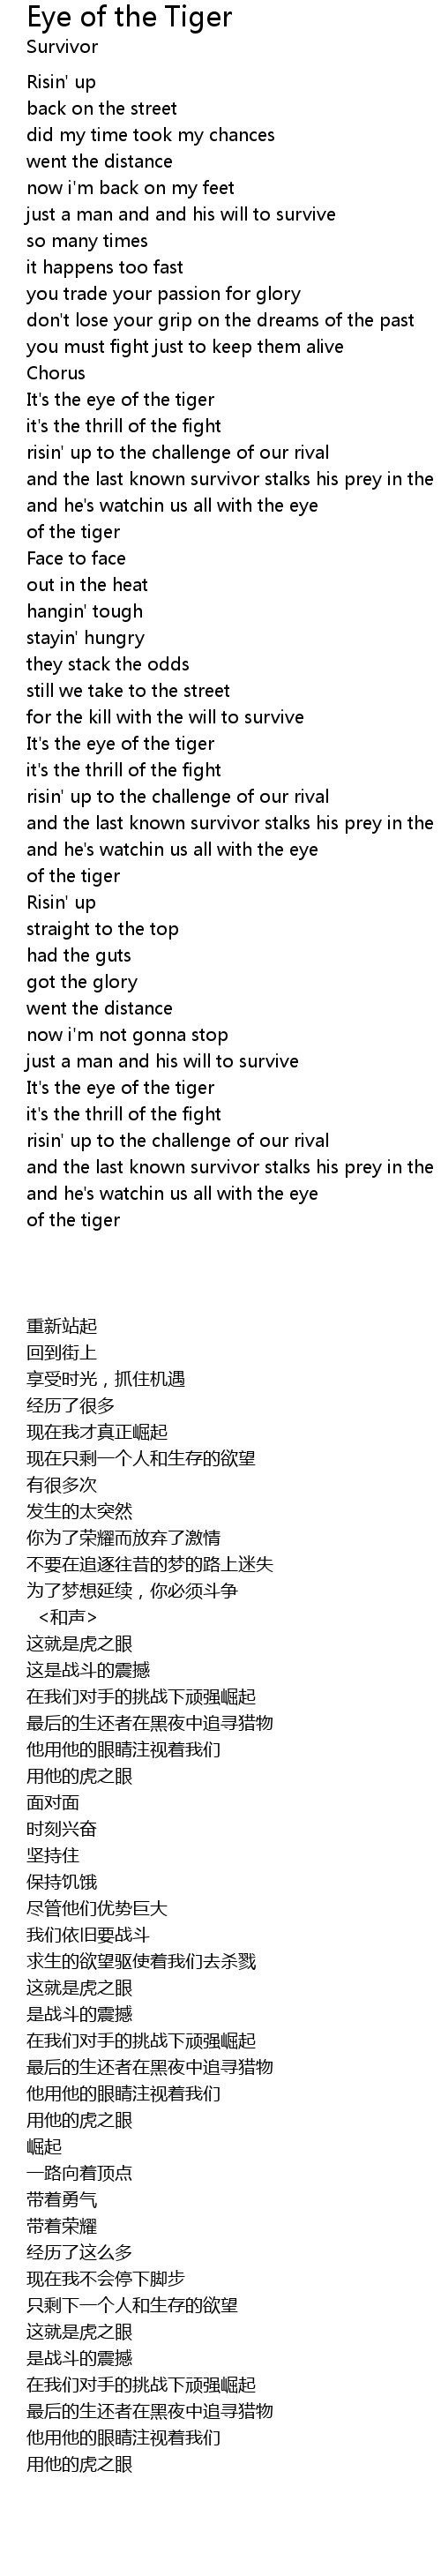 Survivor – Eye of the Tiger Lyrics